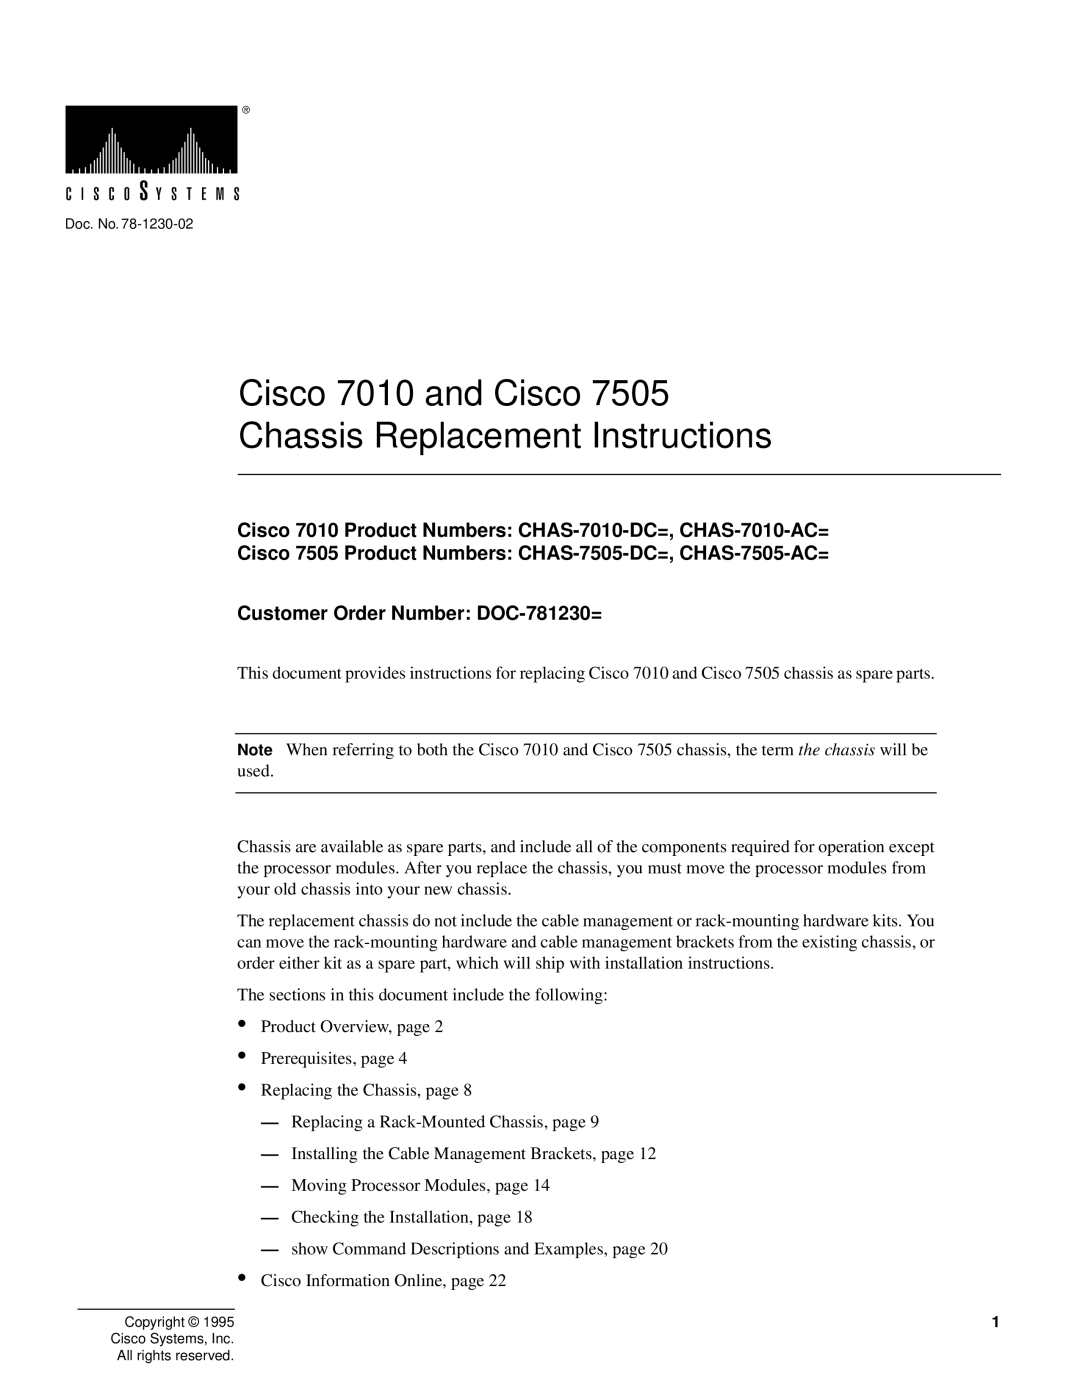 Cisco Systems Cisco 7505 installation instructions Cisco 7010 and Cisco Chassis Replacement Instructions 